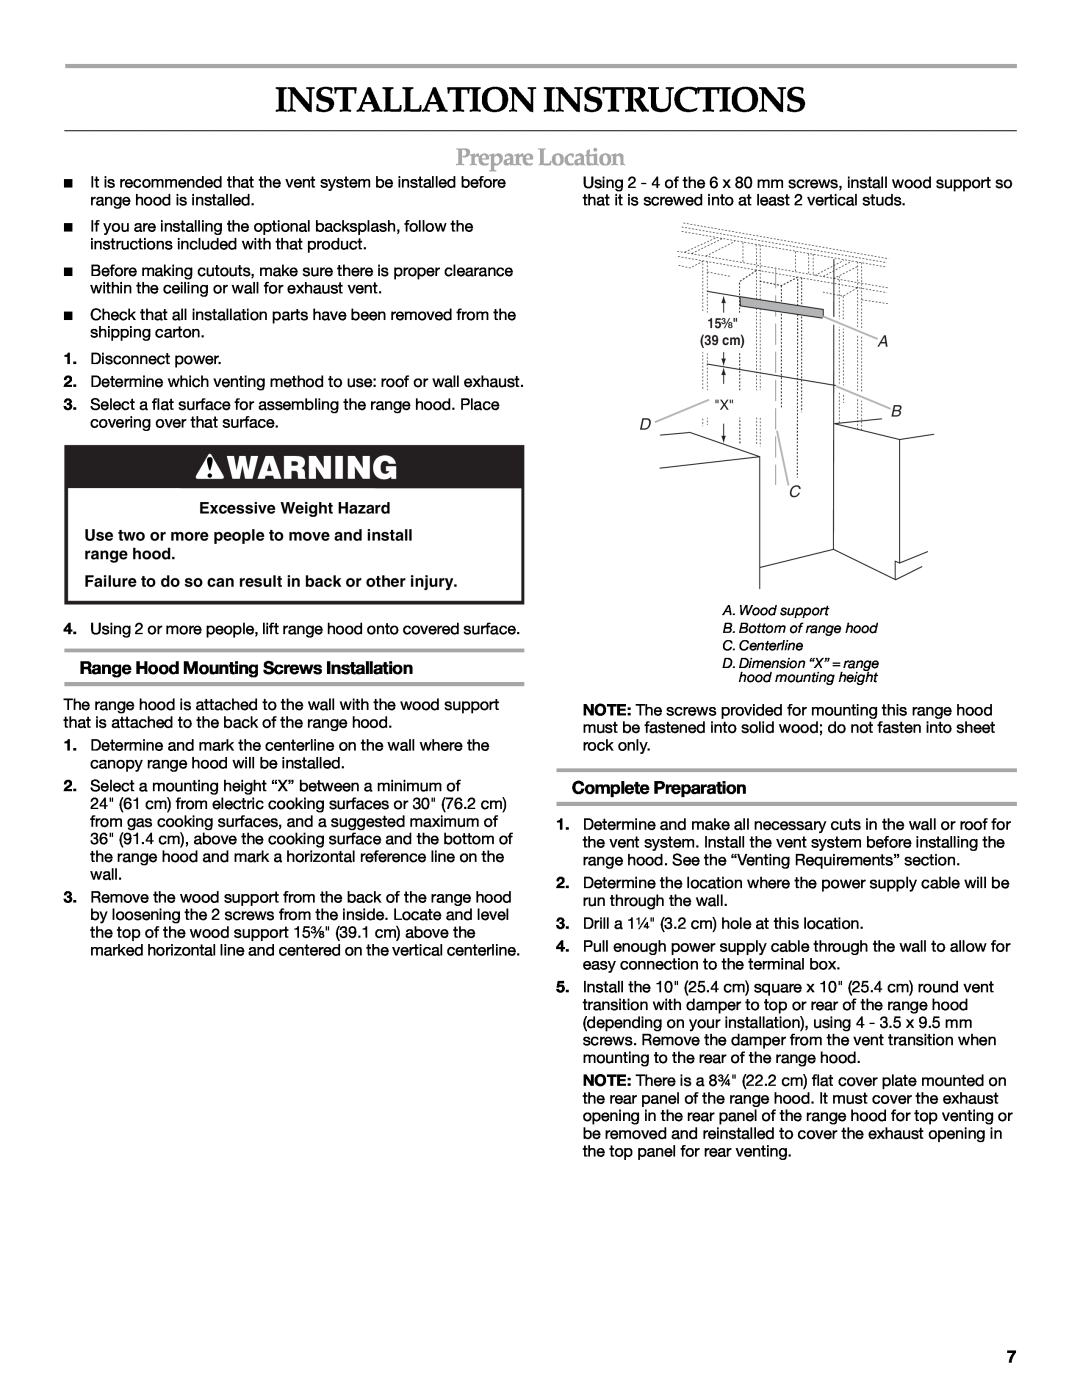 KitchenAid W10331007B Installation Instructions, PrepareLocation, Range Hood Mounting Screws Installation 